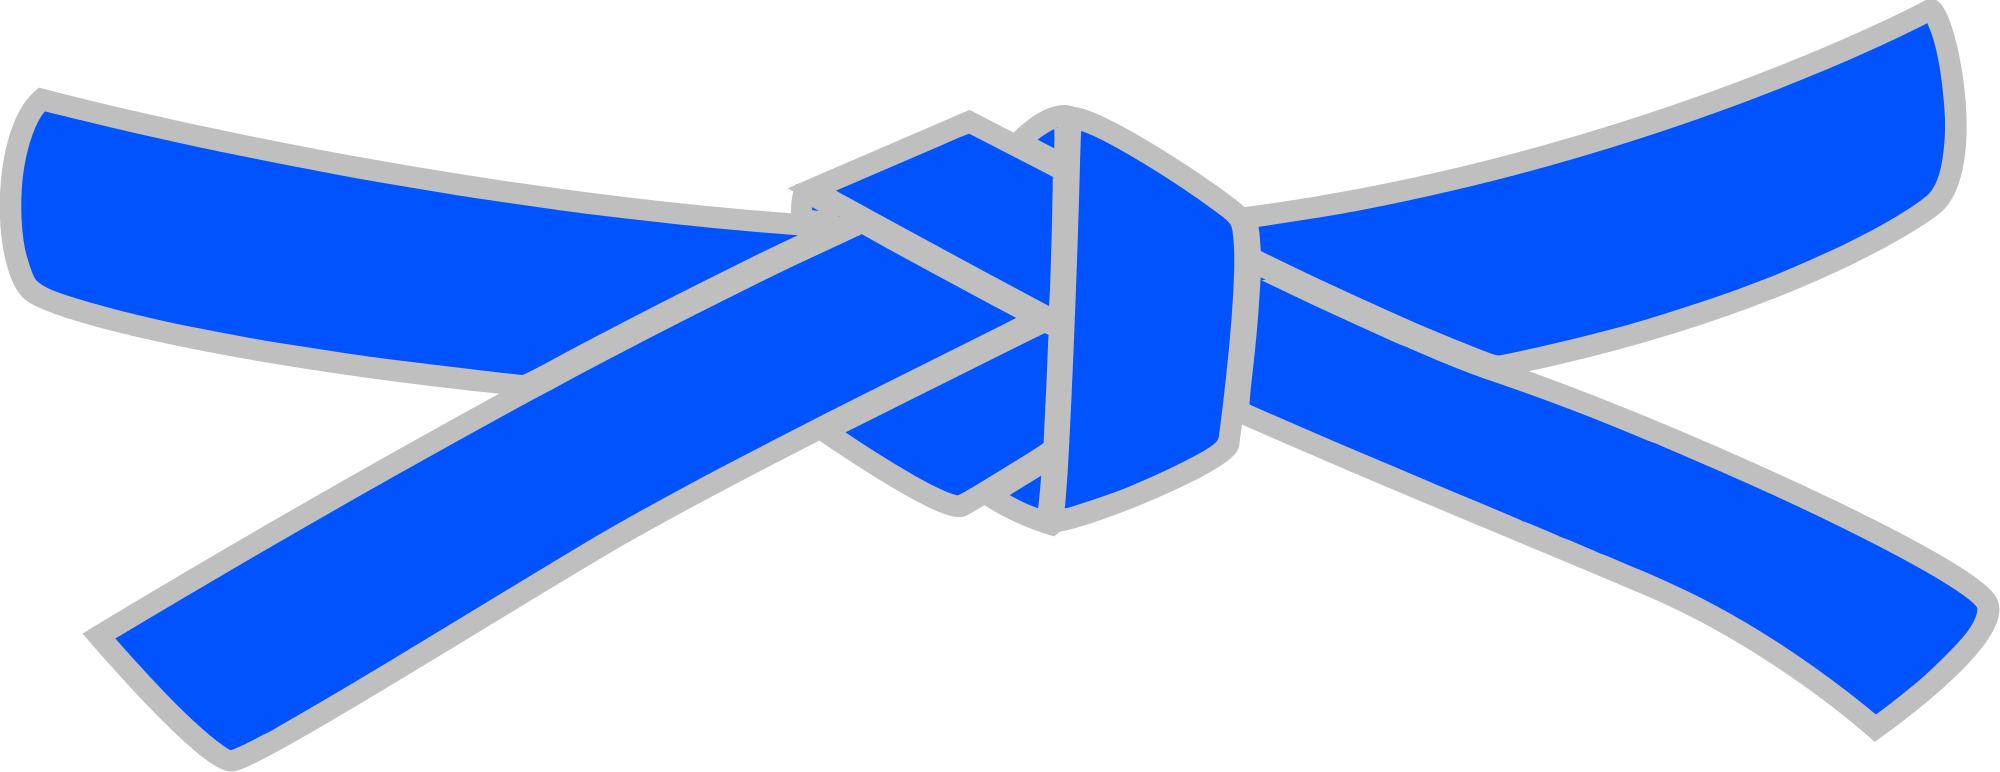 A Blue Ribbon With Grey Border